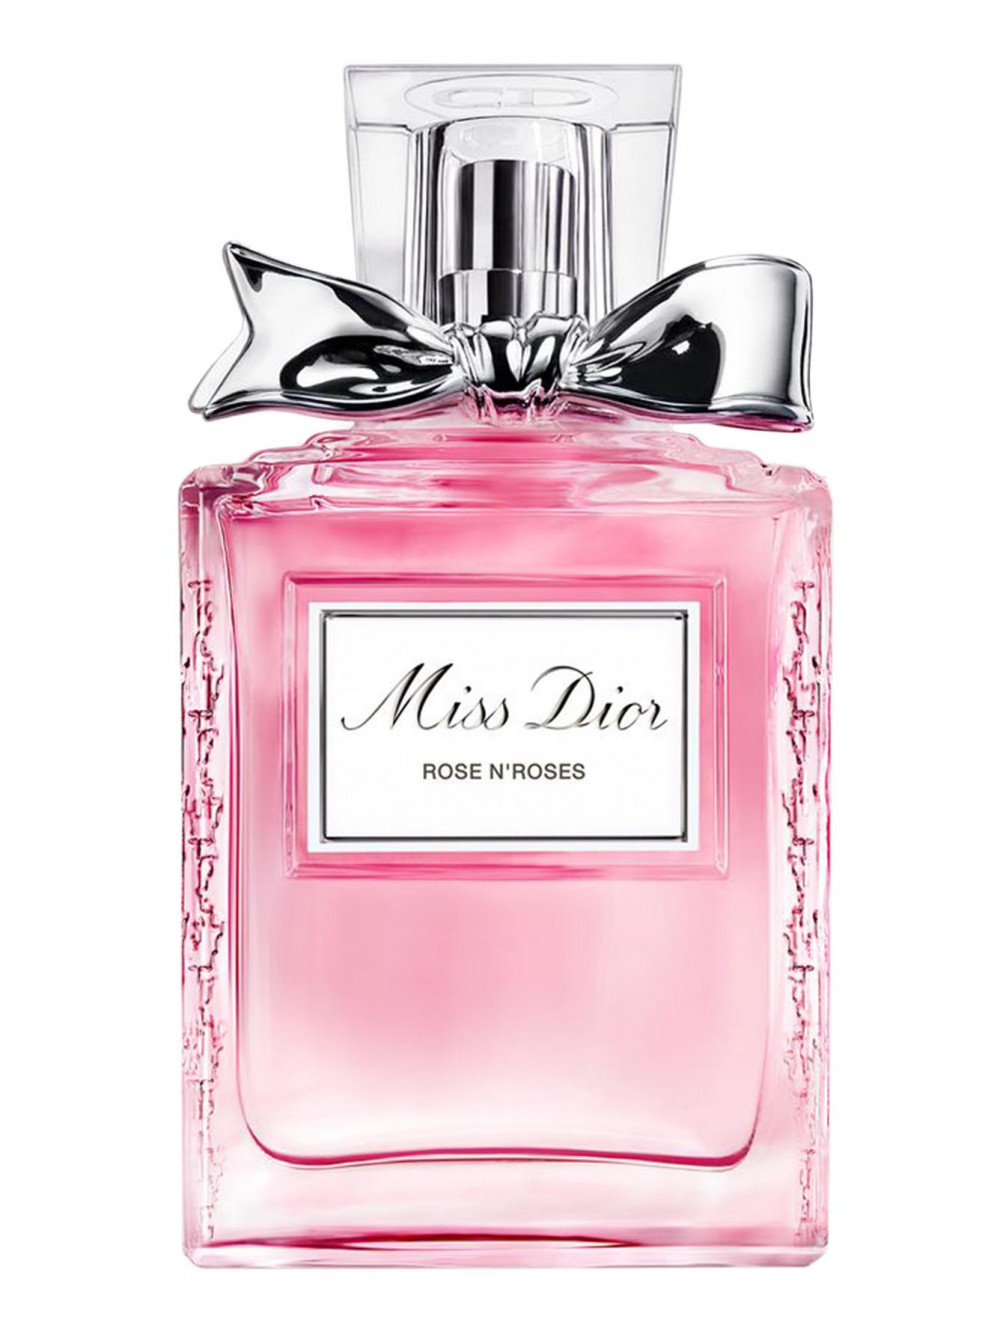 Туалетная вода Miss Dior Rose N'Roses, 30 мл - Общий вид